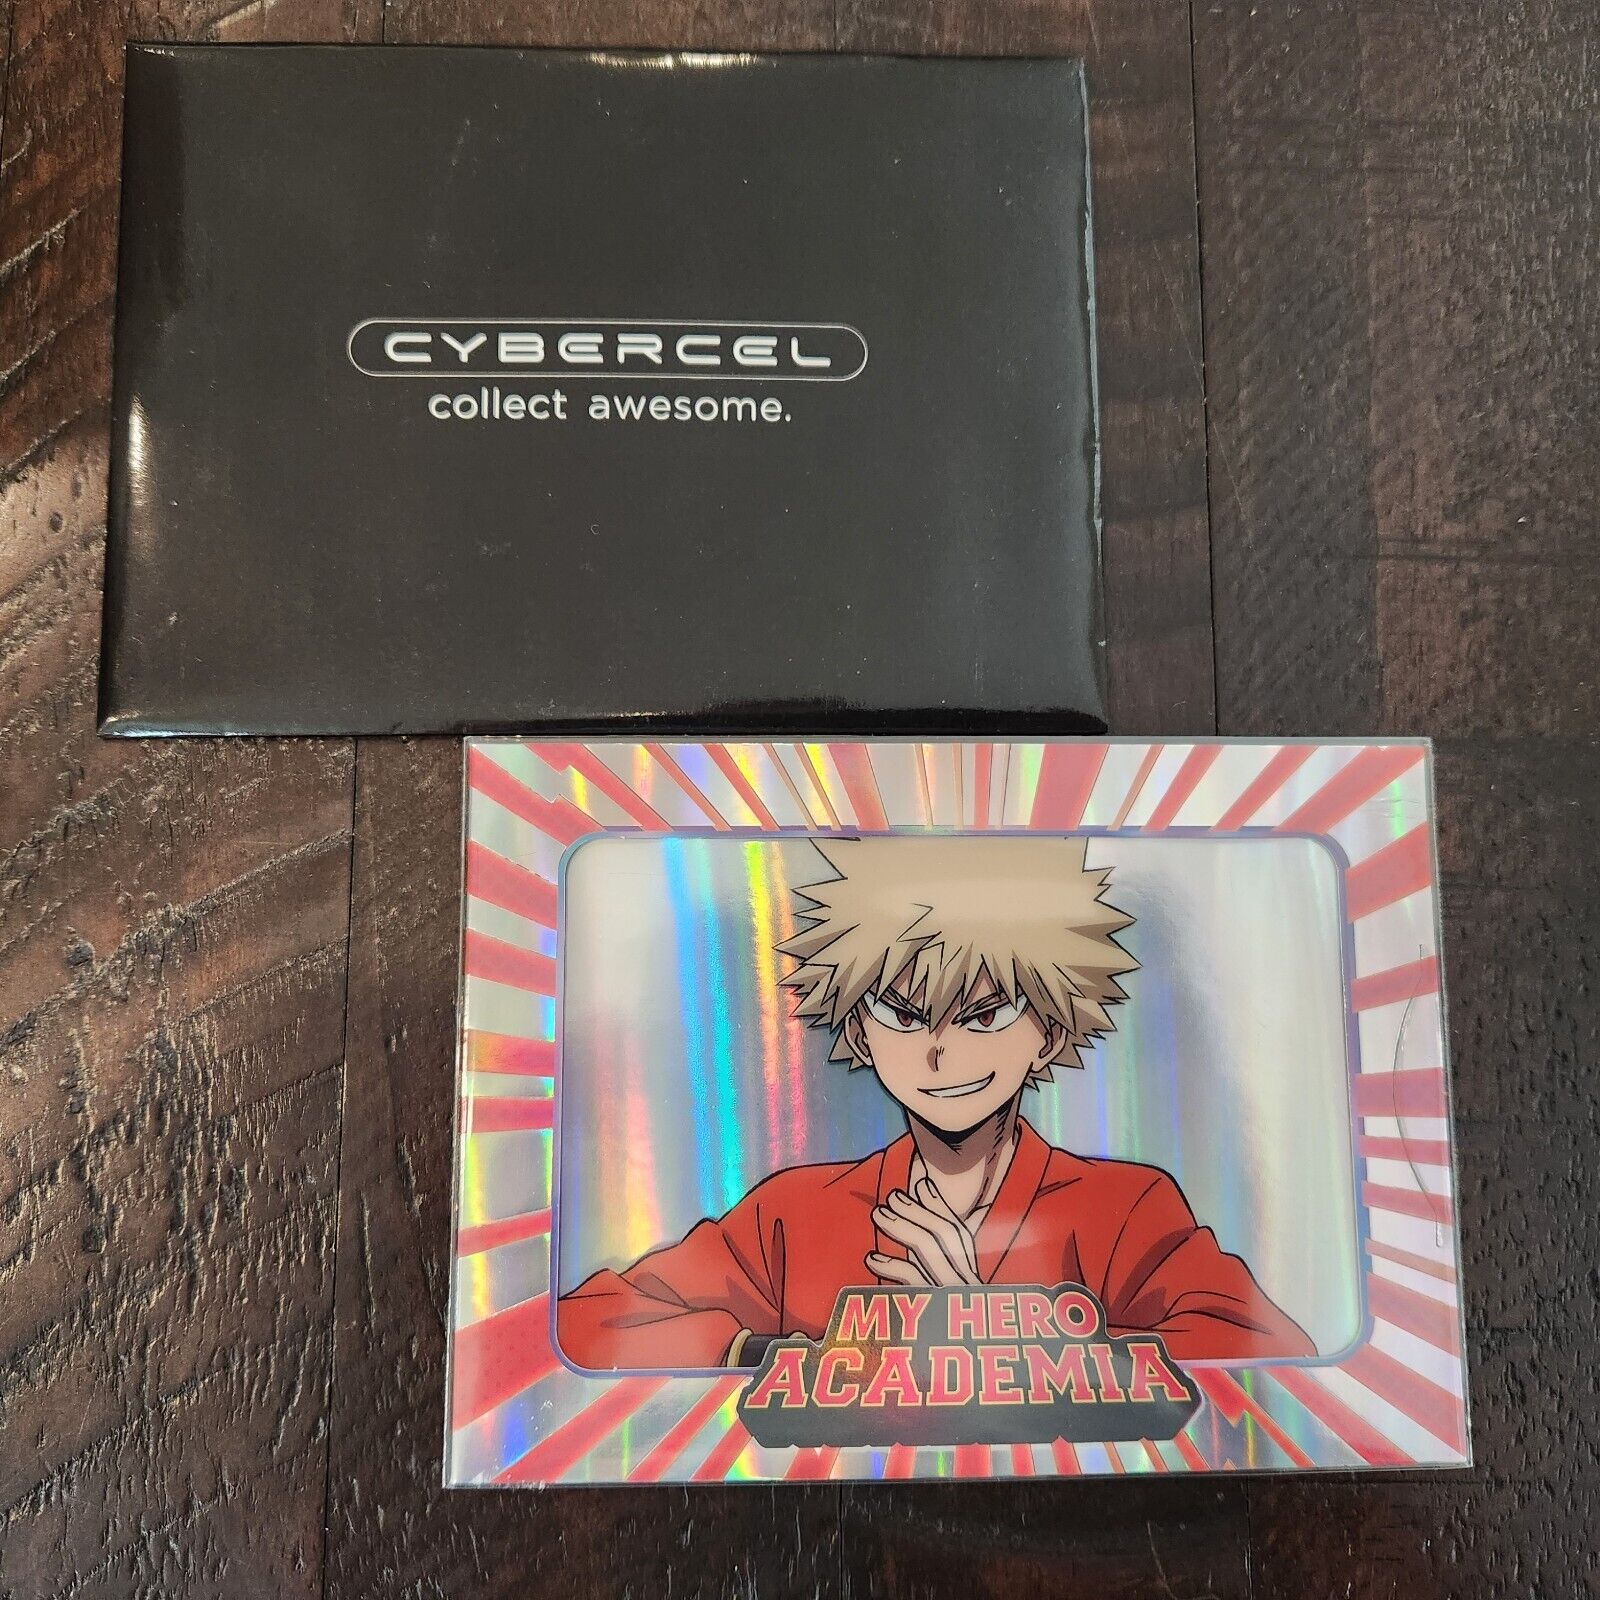 My Hero Academia Cybercel XL SUPER RARE Katsuki Bakugo Box Topper Card UNSCANNED